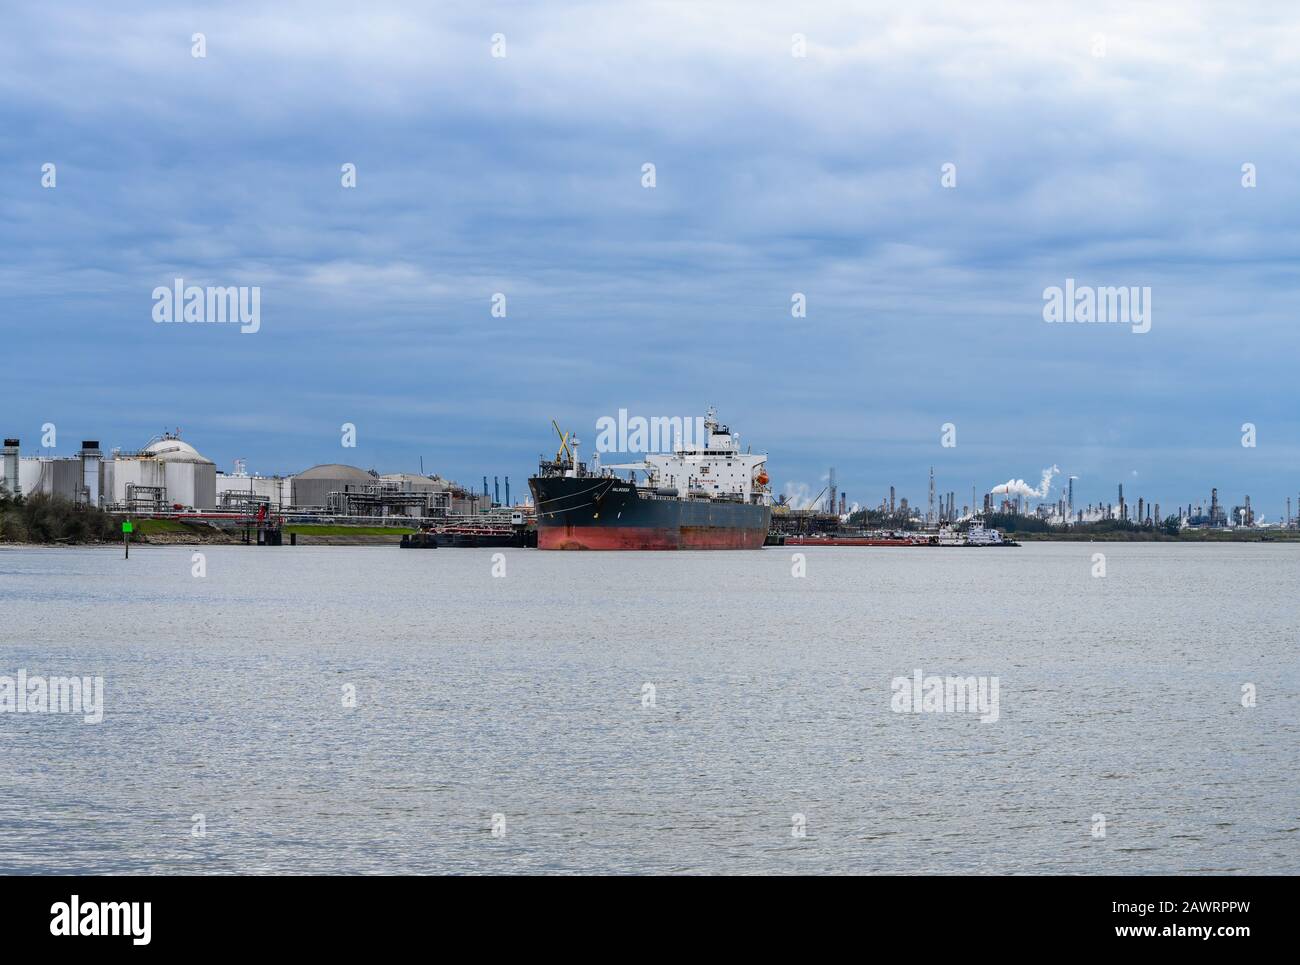 Cargo ship docked at a petrochemical terminal along Gulf of Mexico. Houston, Texas, USA. Stock Photo